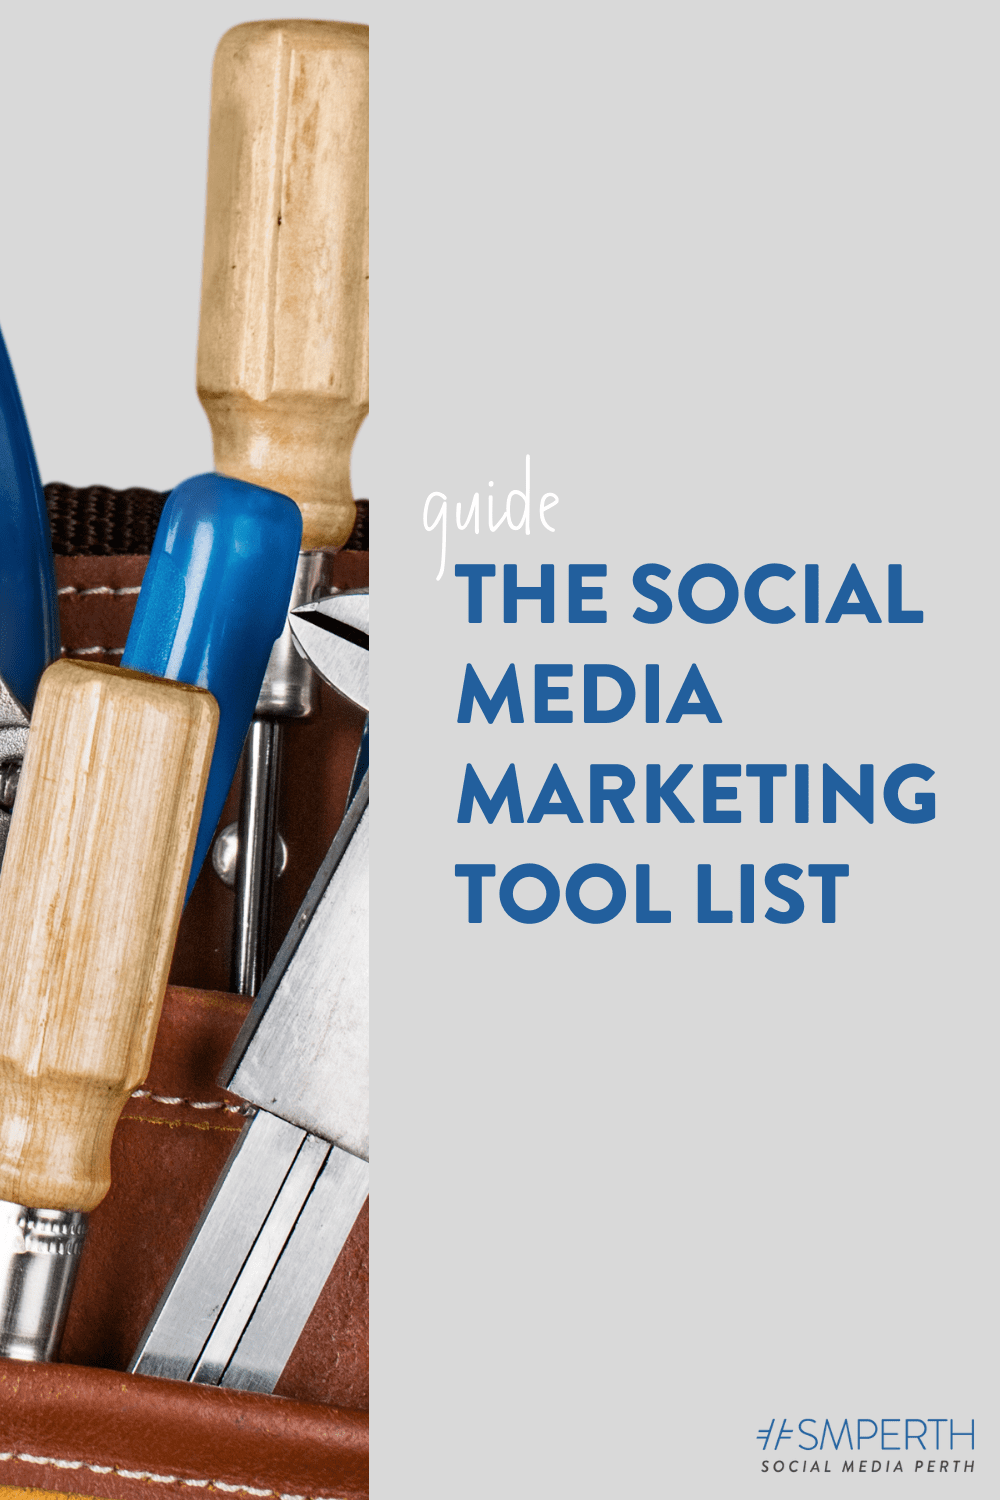 The Social Media Marketing Tool List